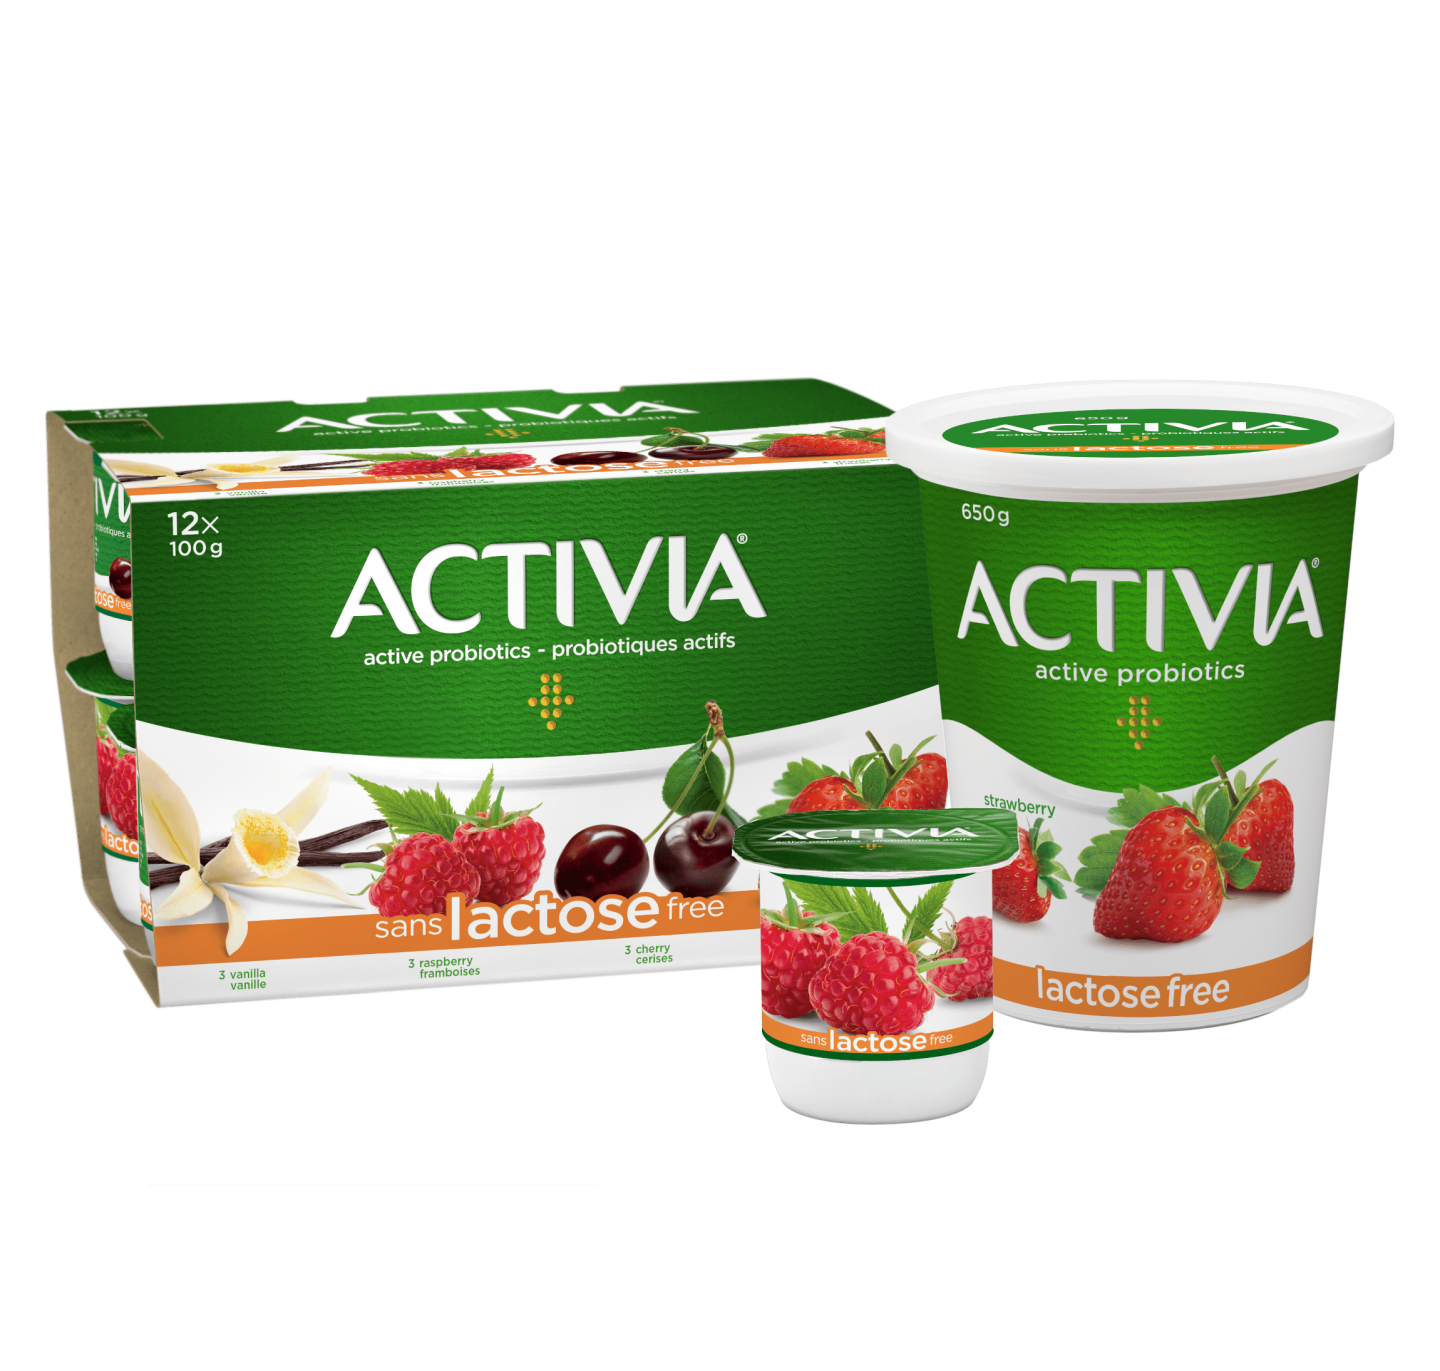 Activia® Probiotic Yogurt Products